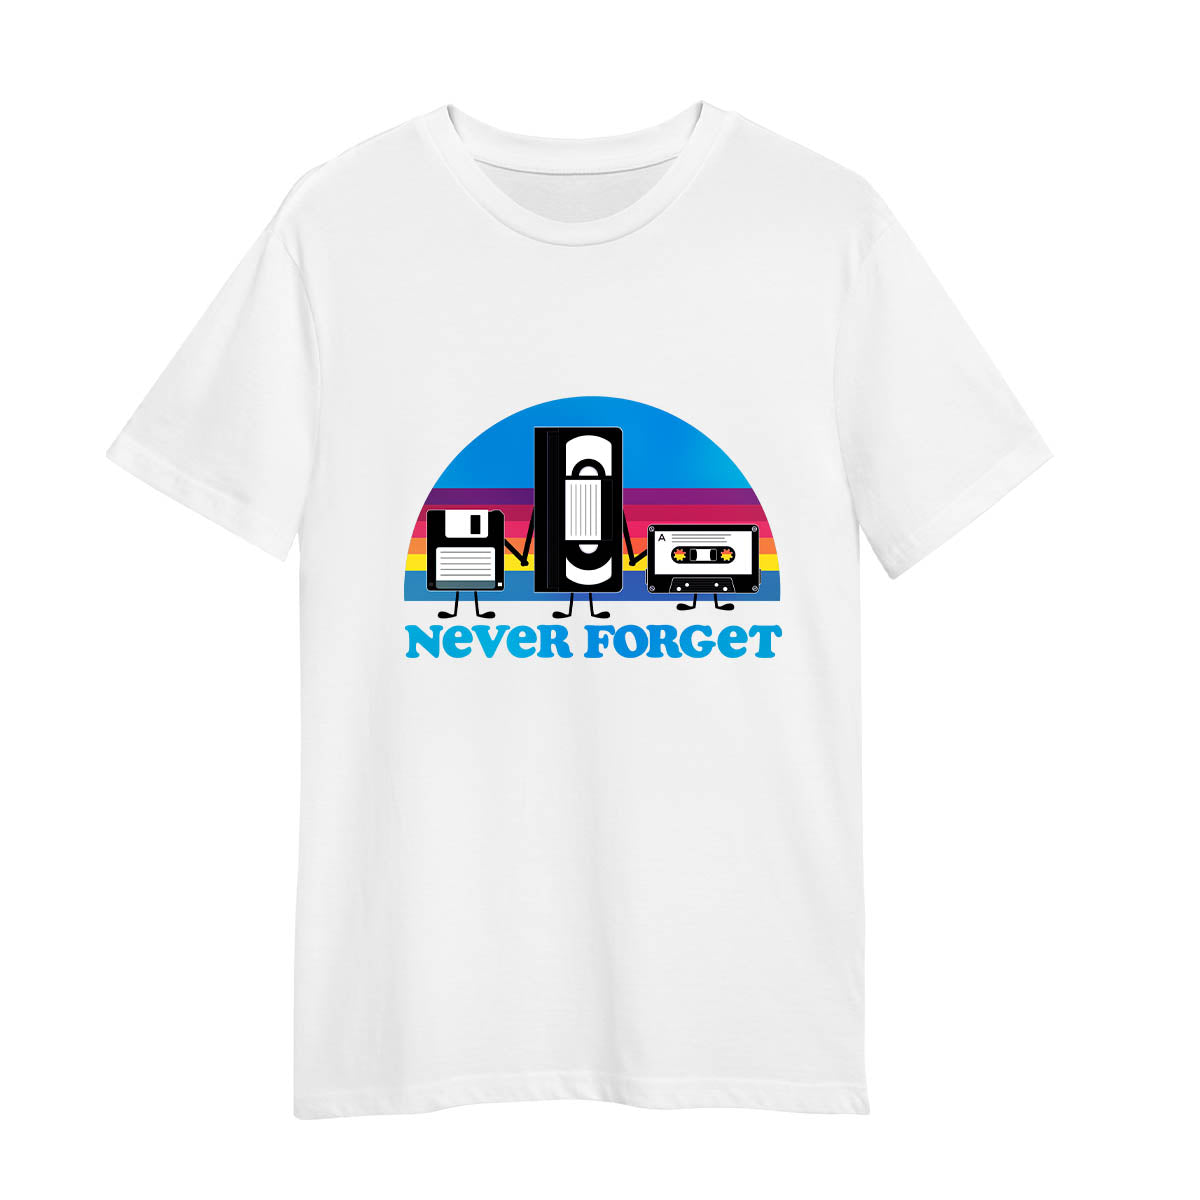 Vintage Never Forget Shirt Funny Retro Floppy Disk Tee T-Shirt Nostalgia t-shirt 8-bit Gaming Unisex White T-Shirts